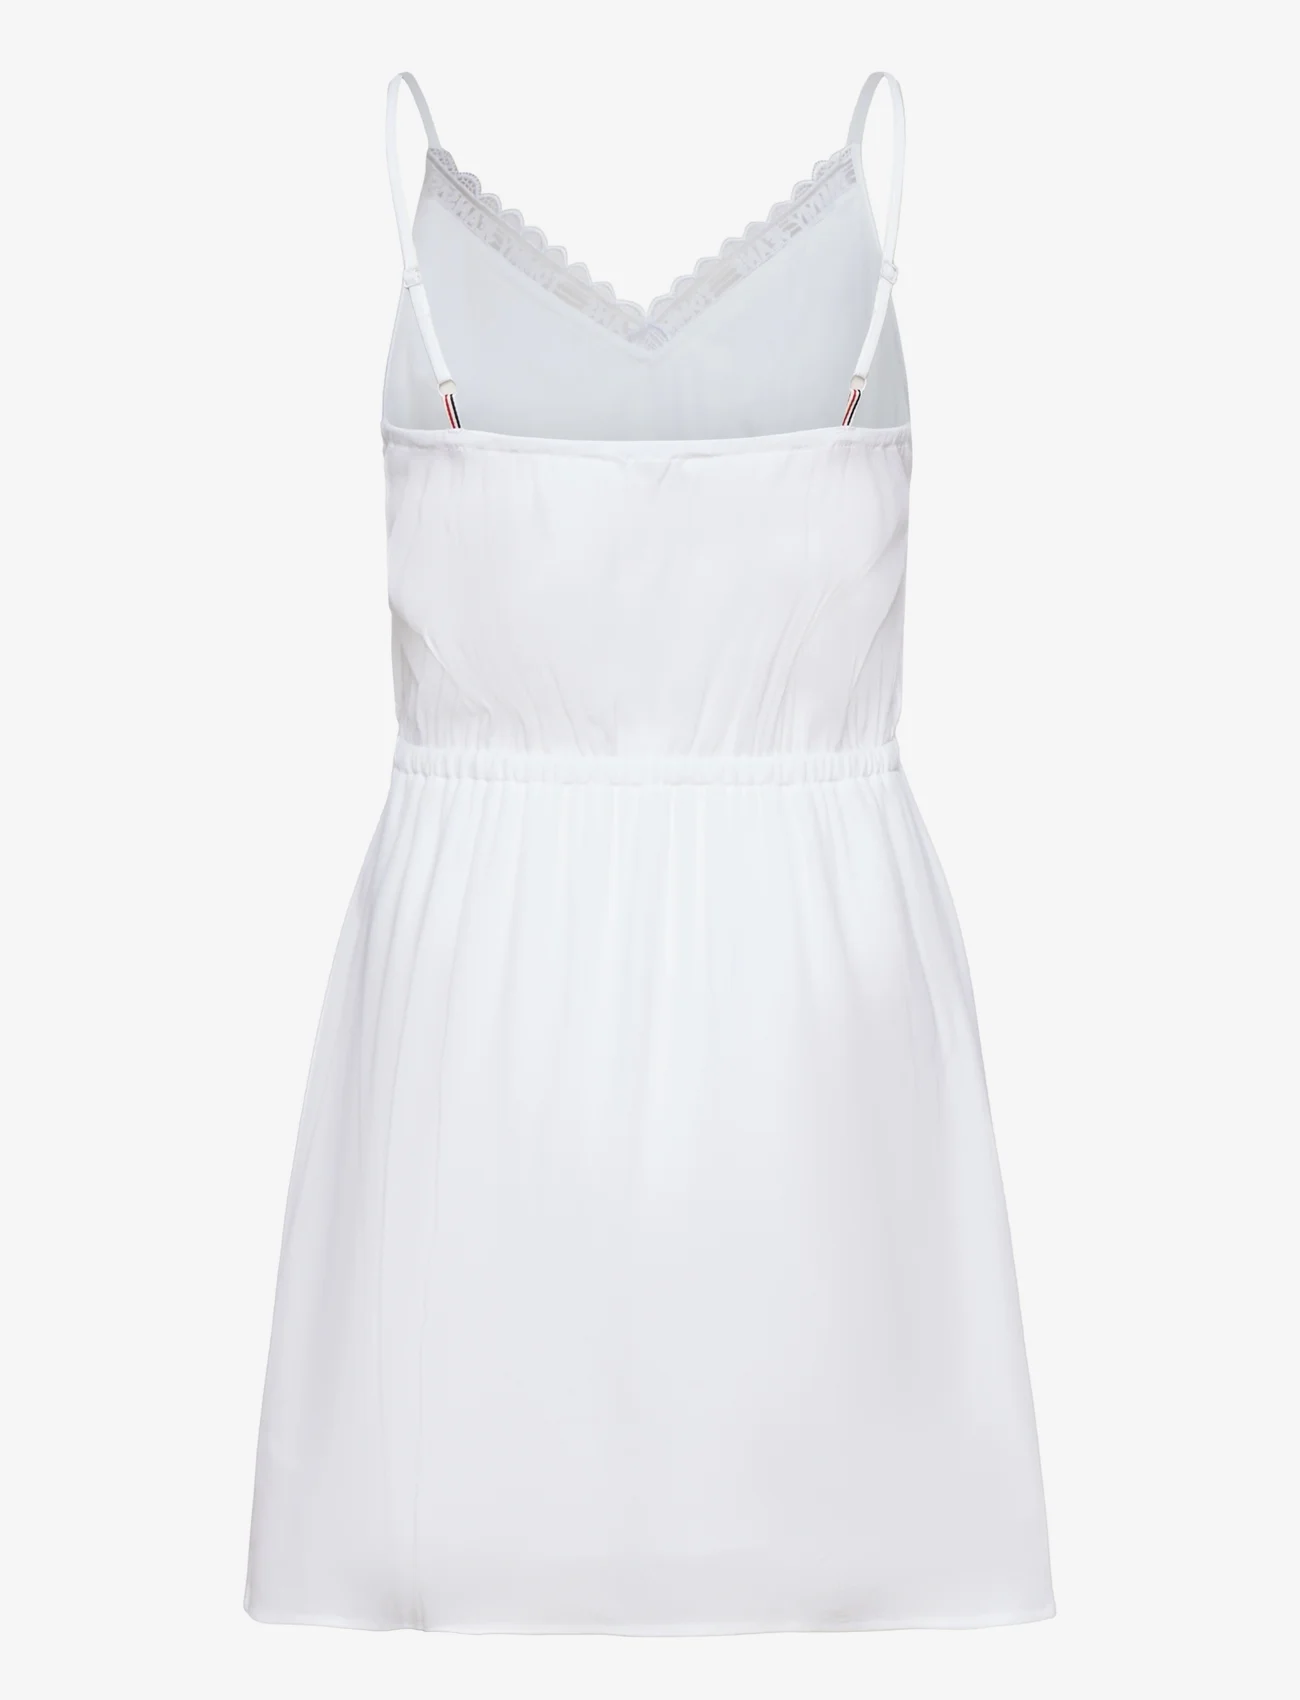 Tommy Jeans - TJW ESSENTIAL LACE STRAP DRESS - t-shirt jurken - white - 1